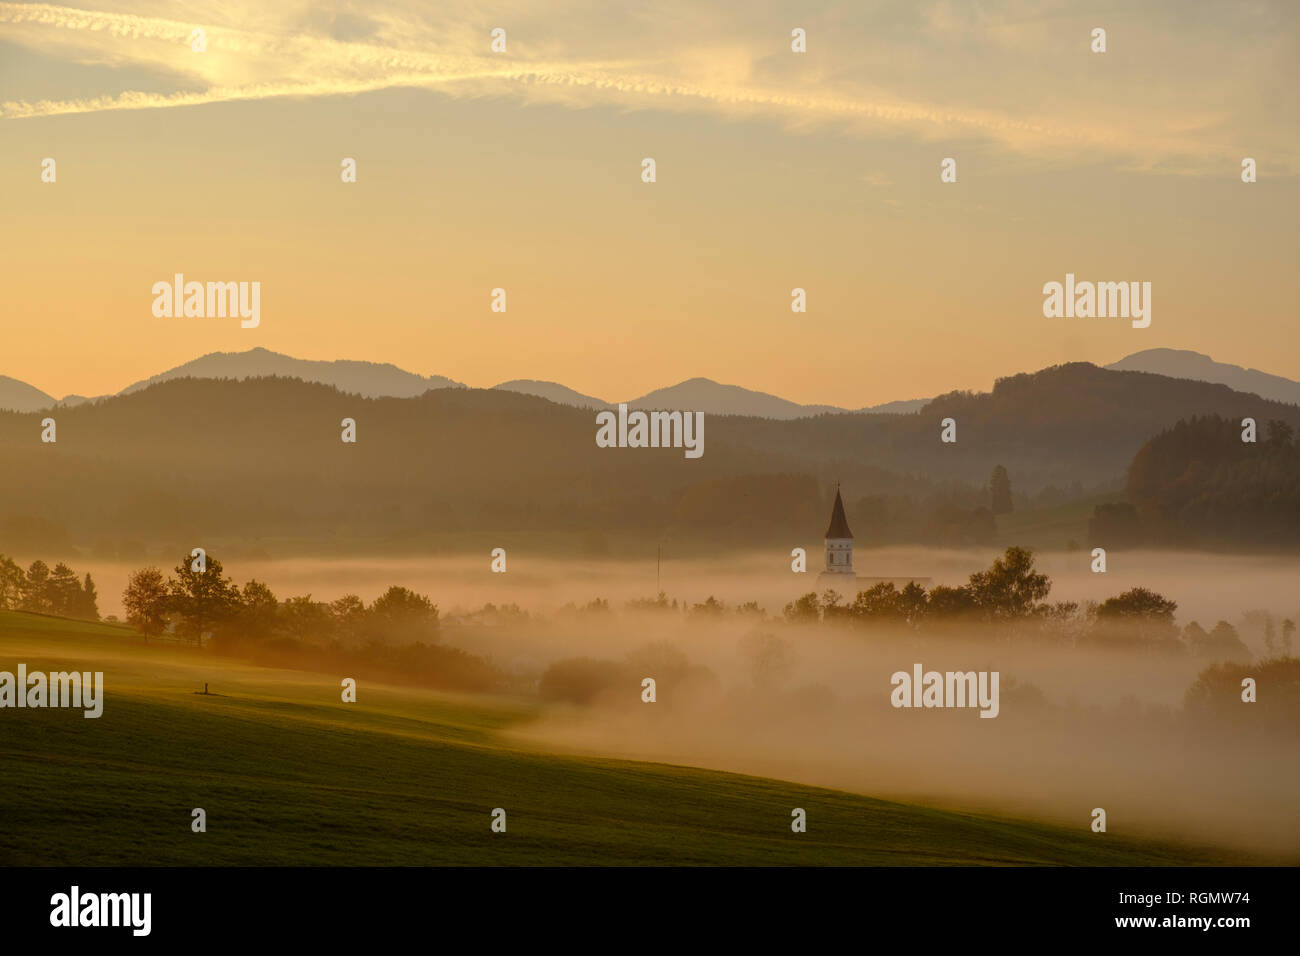 Germany, Pfaffenwinkel, view of landscape at morning mist Stock Photo